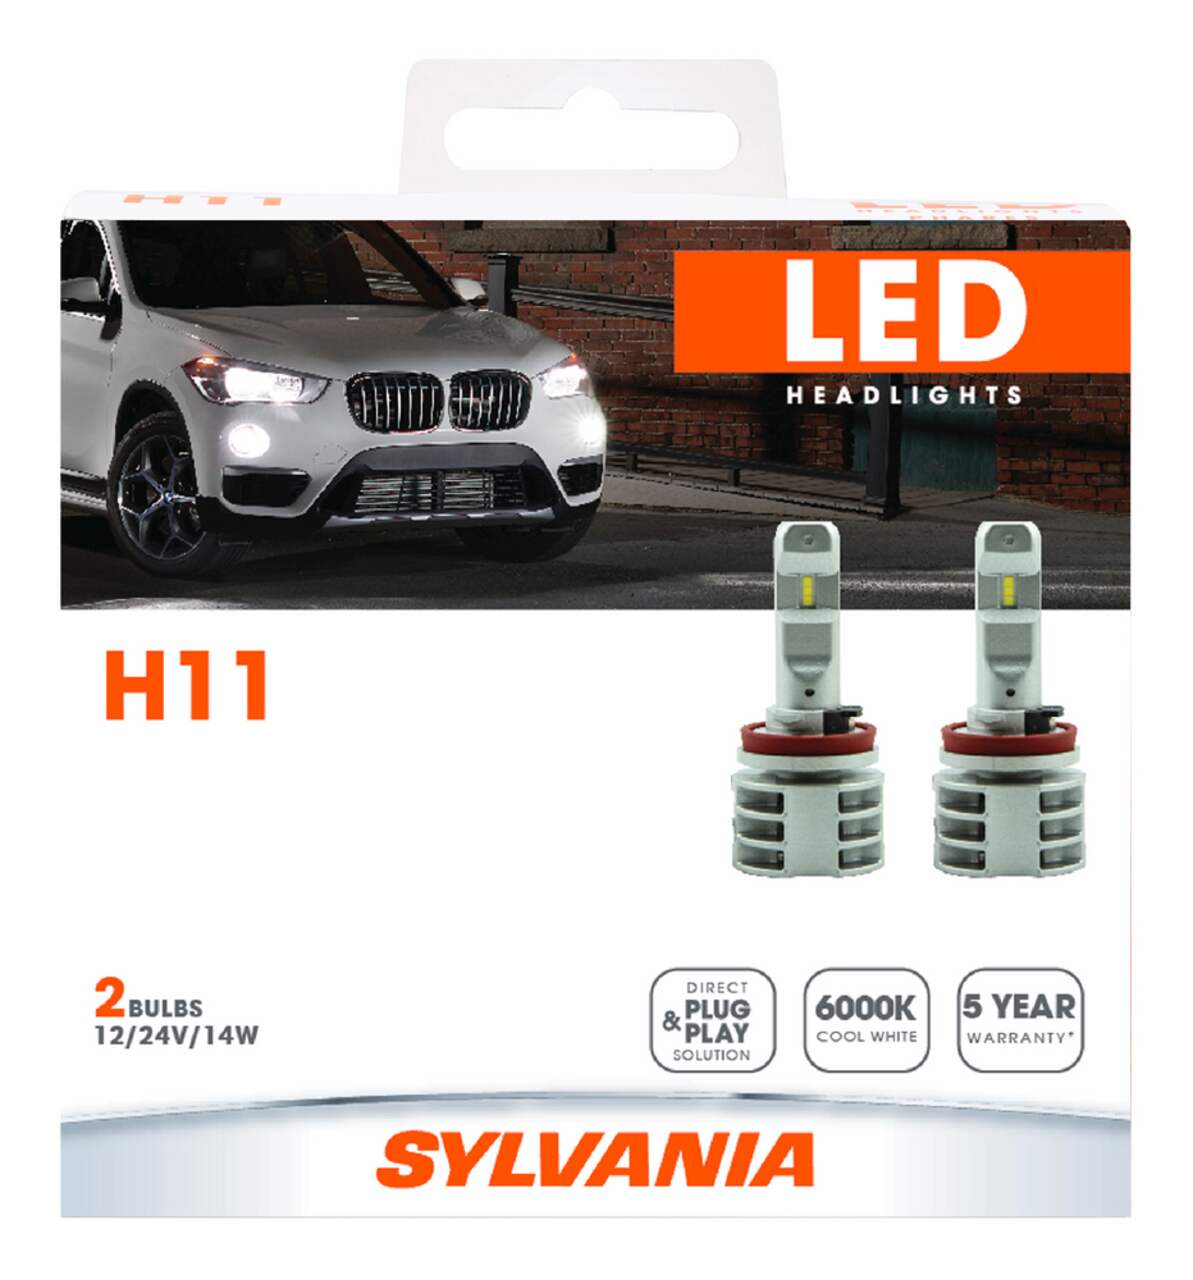 https://media-www.canadiantire.ca/product/automotive/auto-maintenance/auto-lighting/0200504/h11-sylvania-led-headlight-bulbs-2-pk-588ff956-dd8c-40be-ac3a-adfc958fb357.png?imdensity=1&imwidth=640&impolicy=mZoom